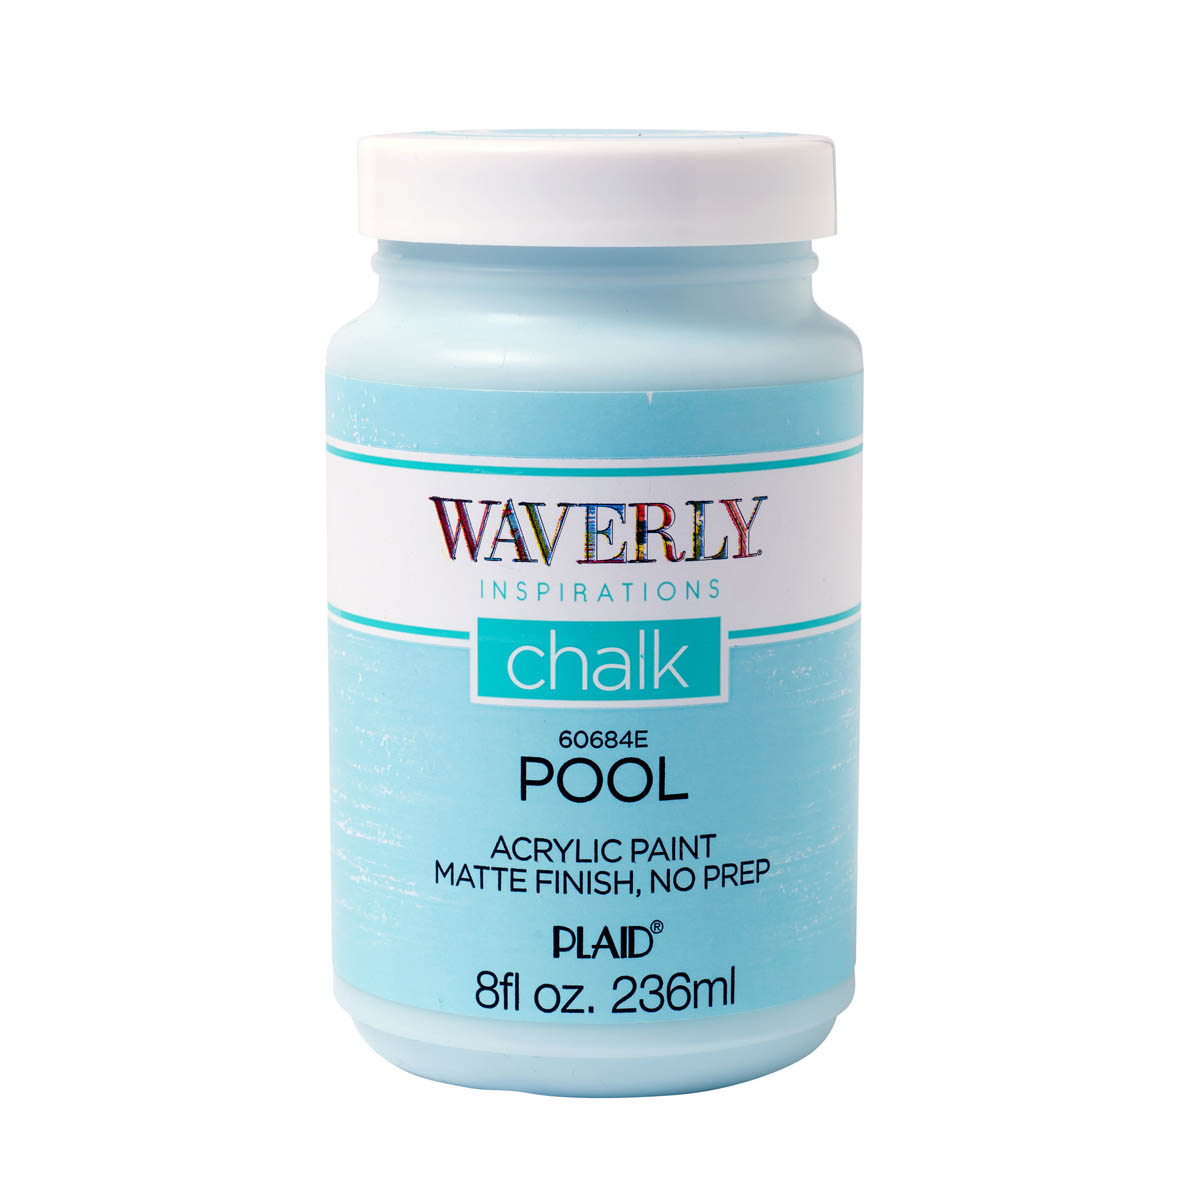 Waverly ® Inspirations Chalk Acrylic Paint - Pool, 8 oz. - 60684E